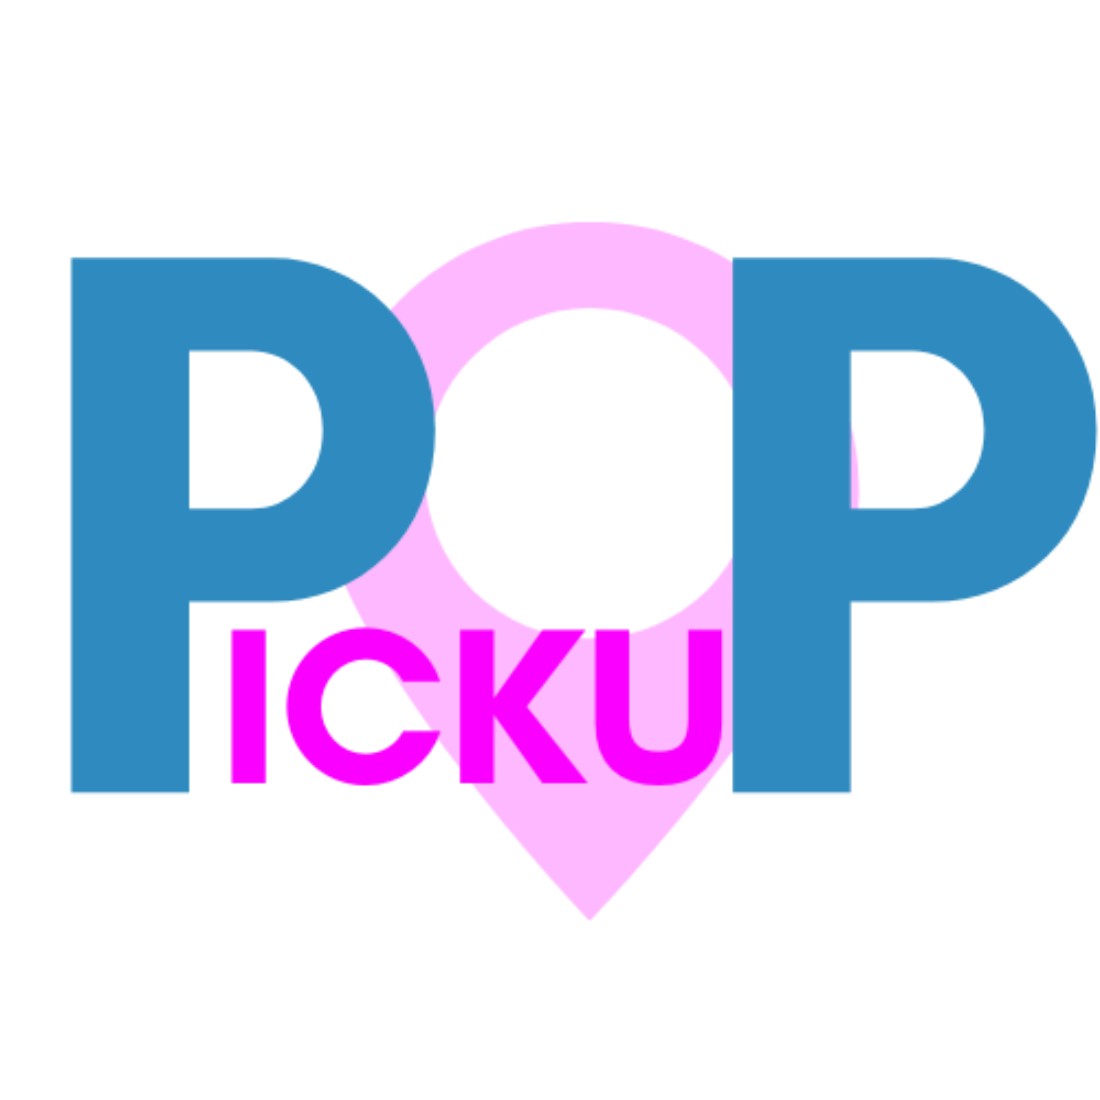 Pickup Logo Design cover image.